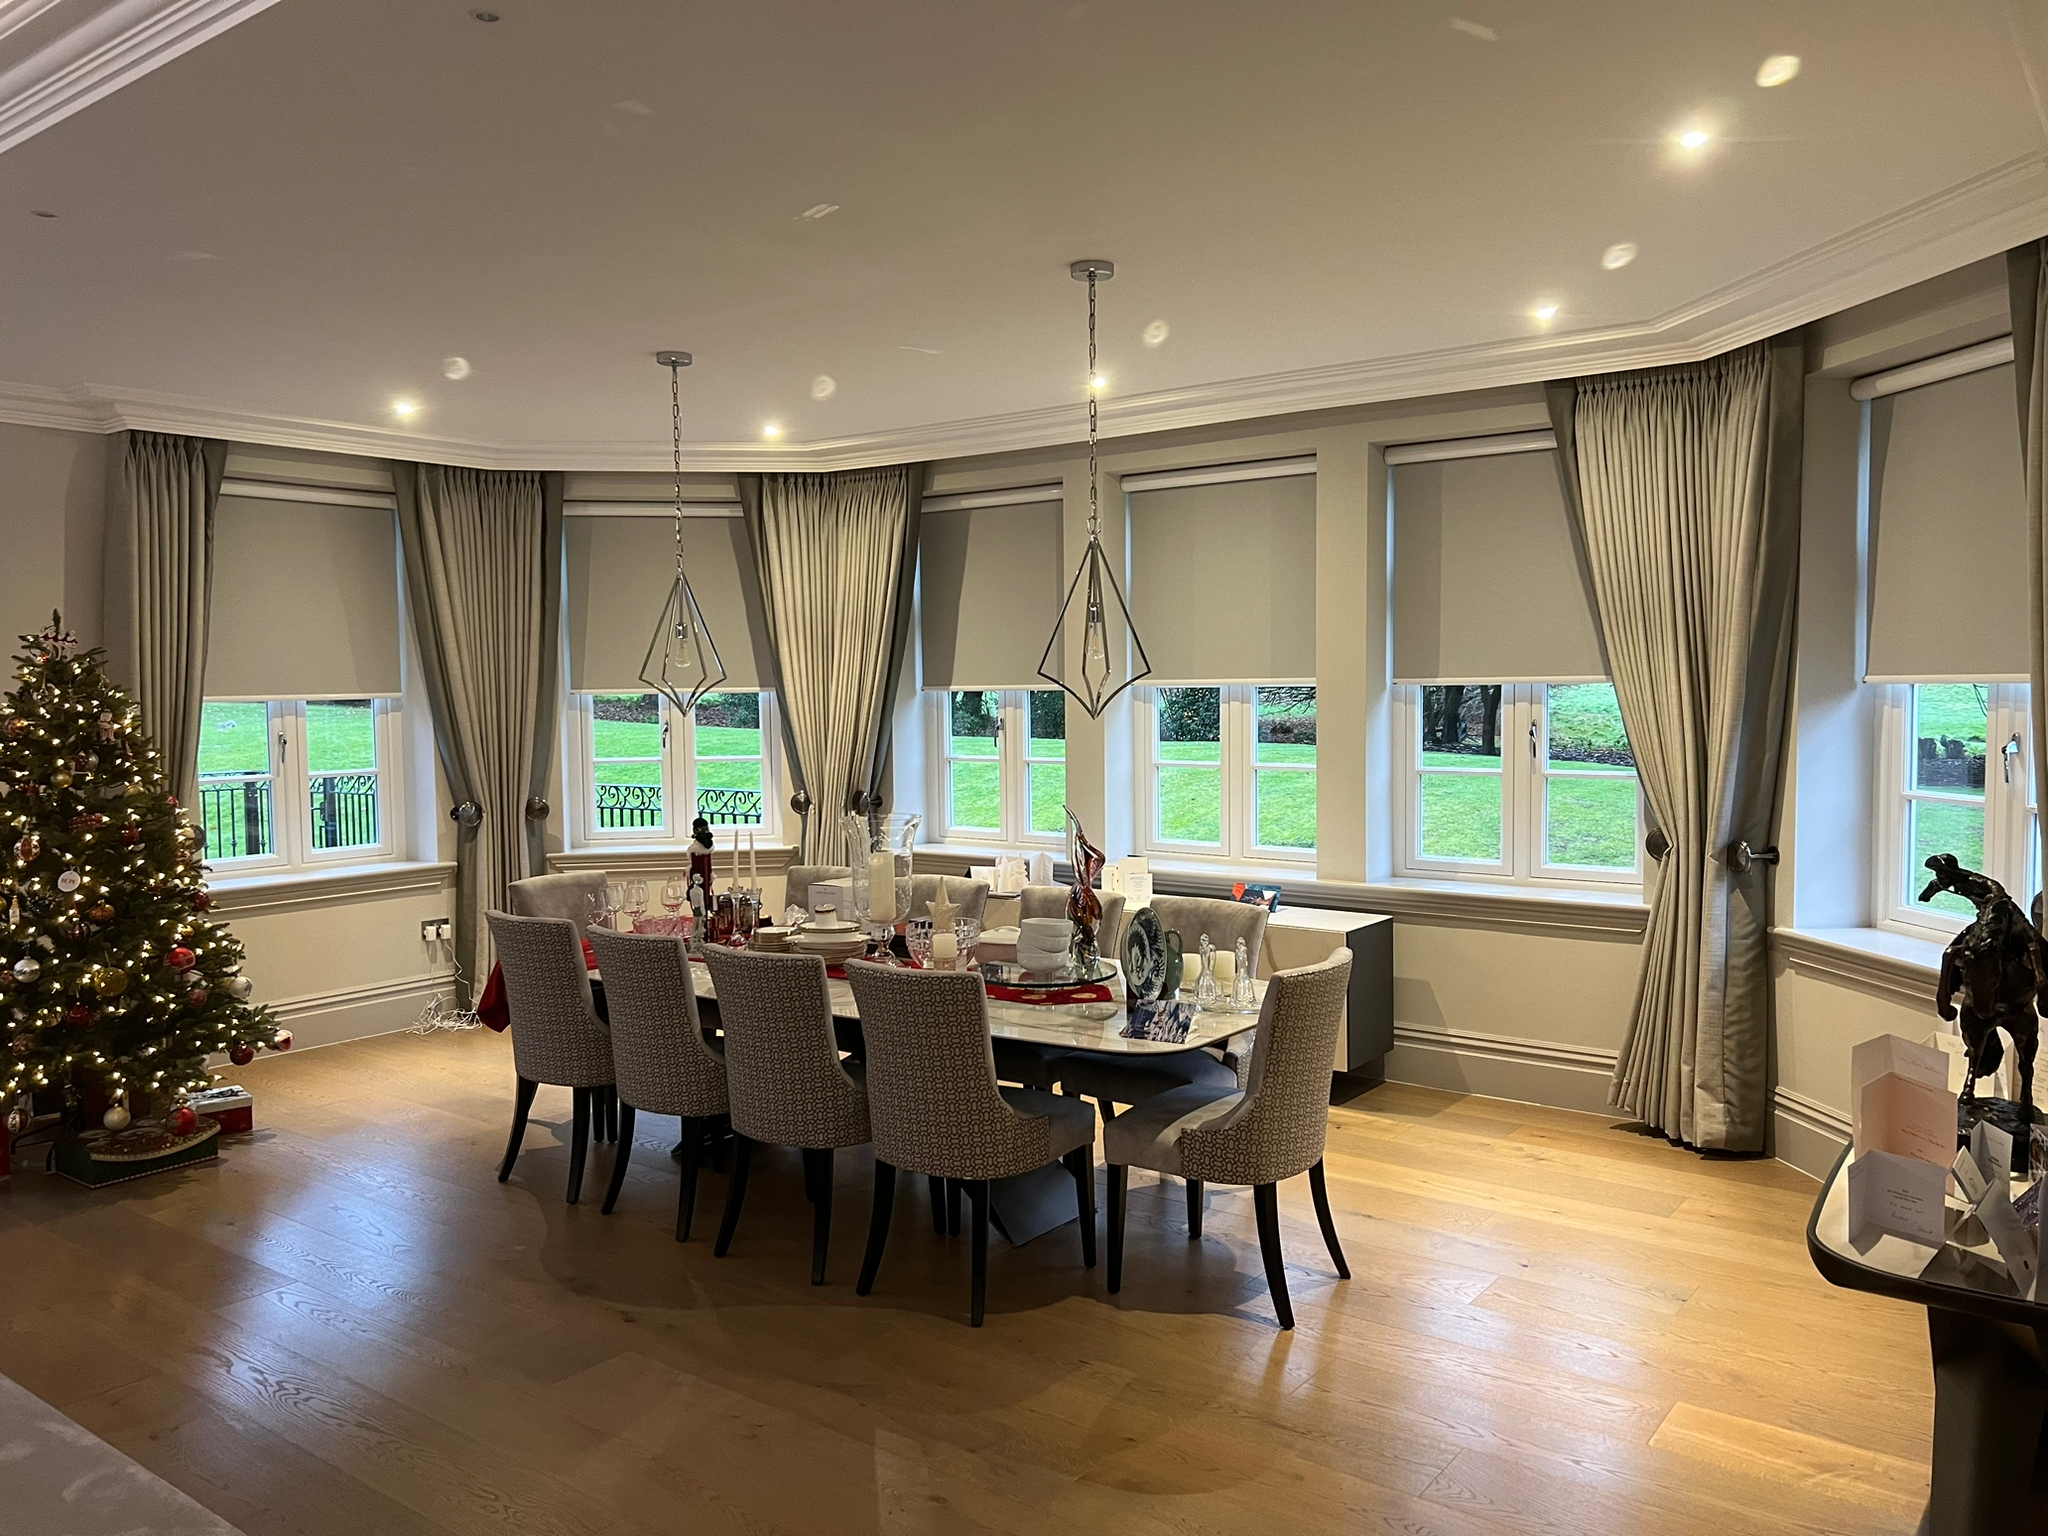 ULTRA Smart Roller blinds in dining room